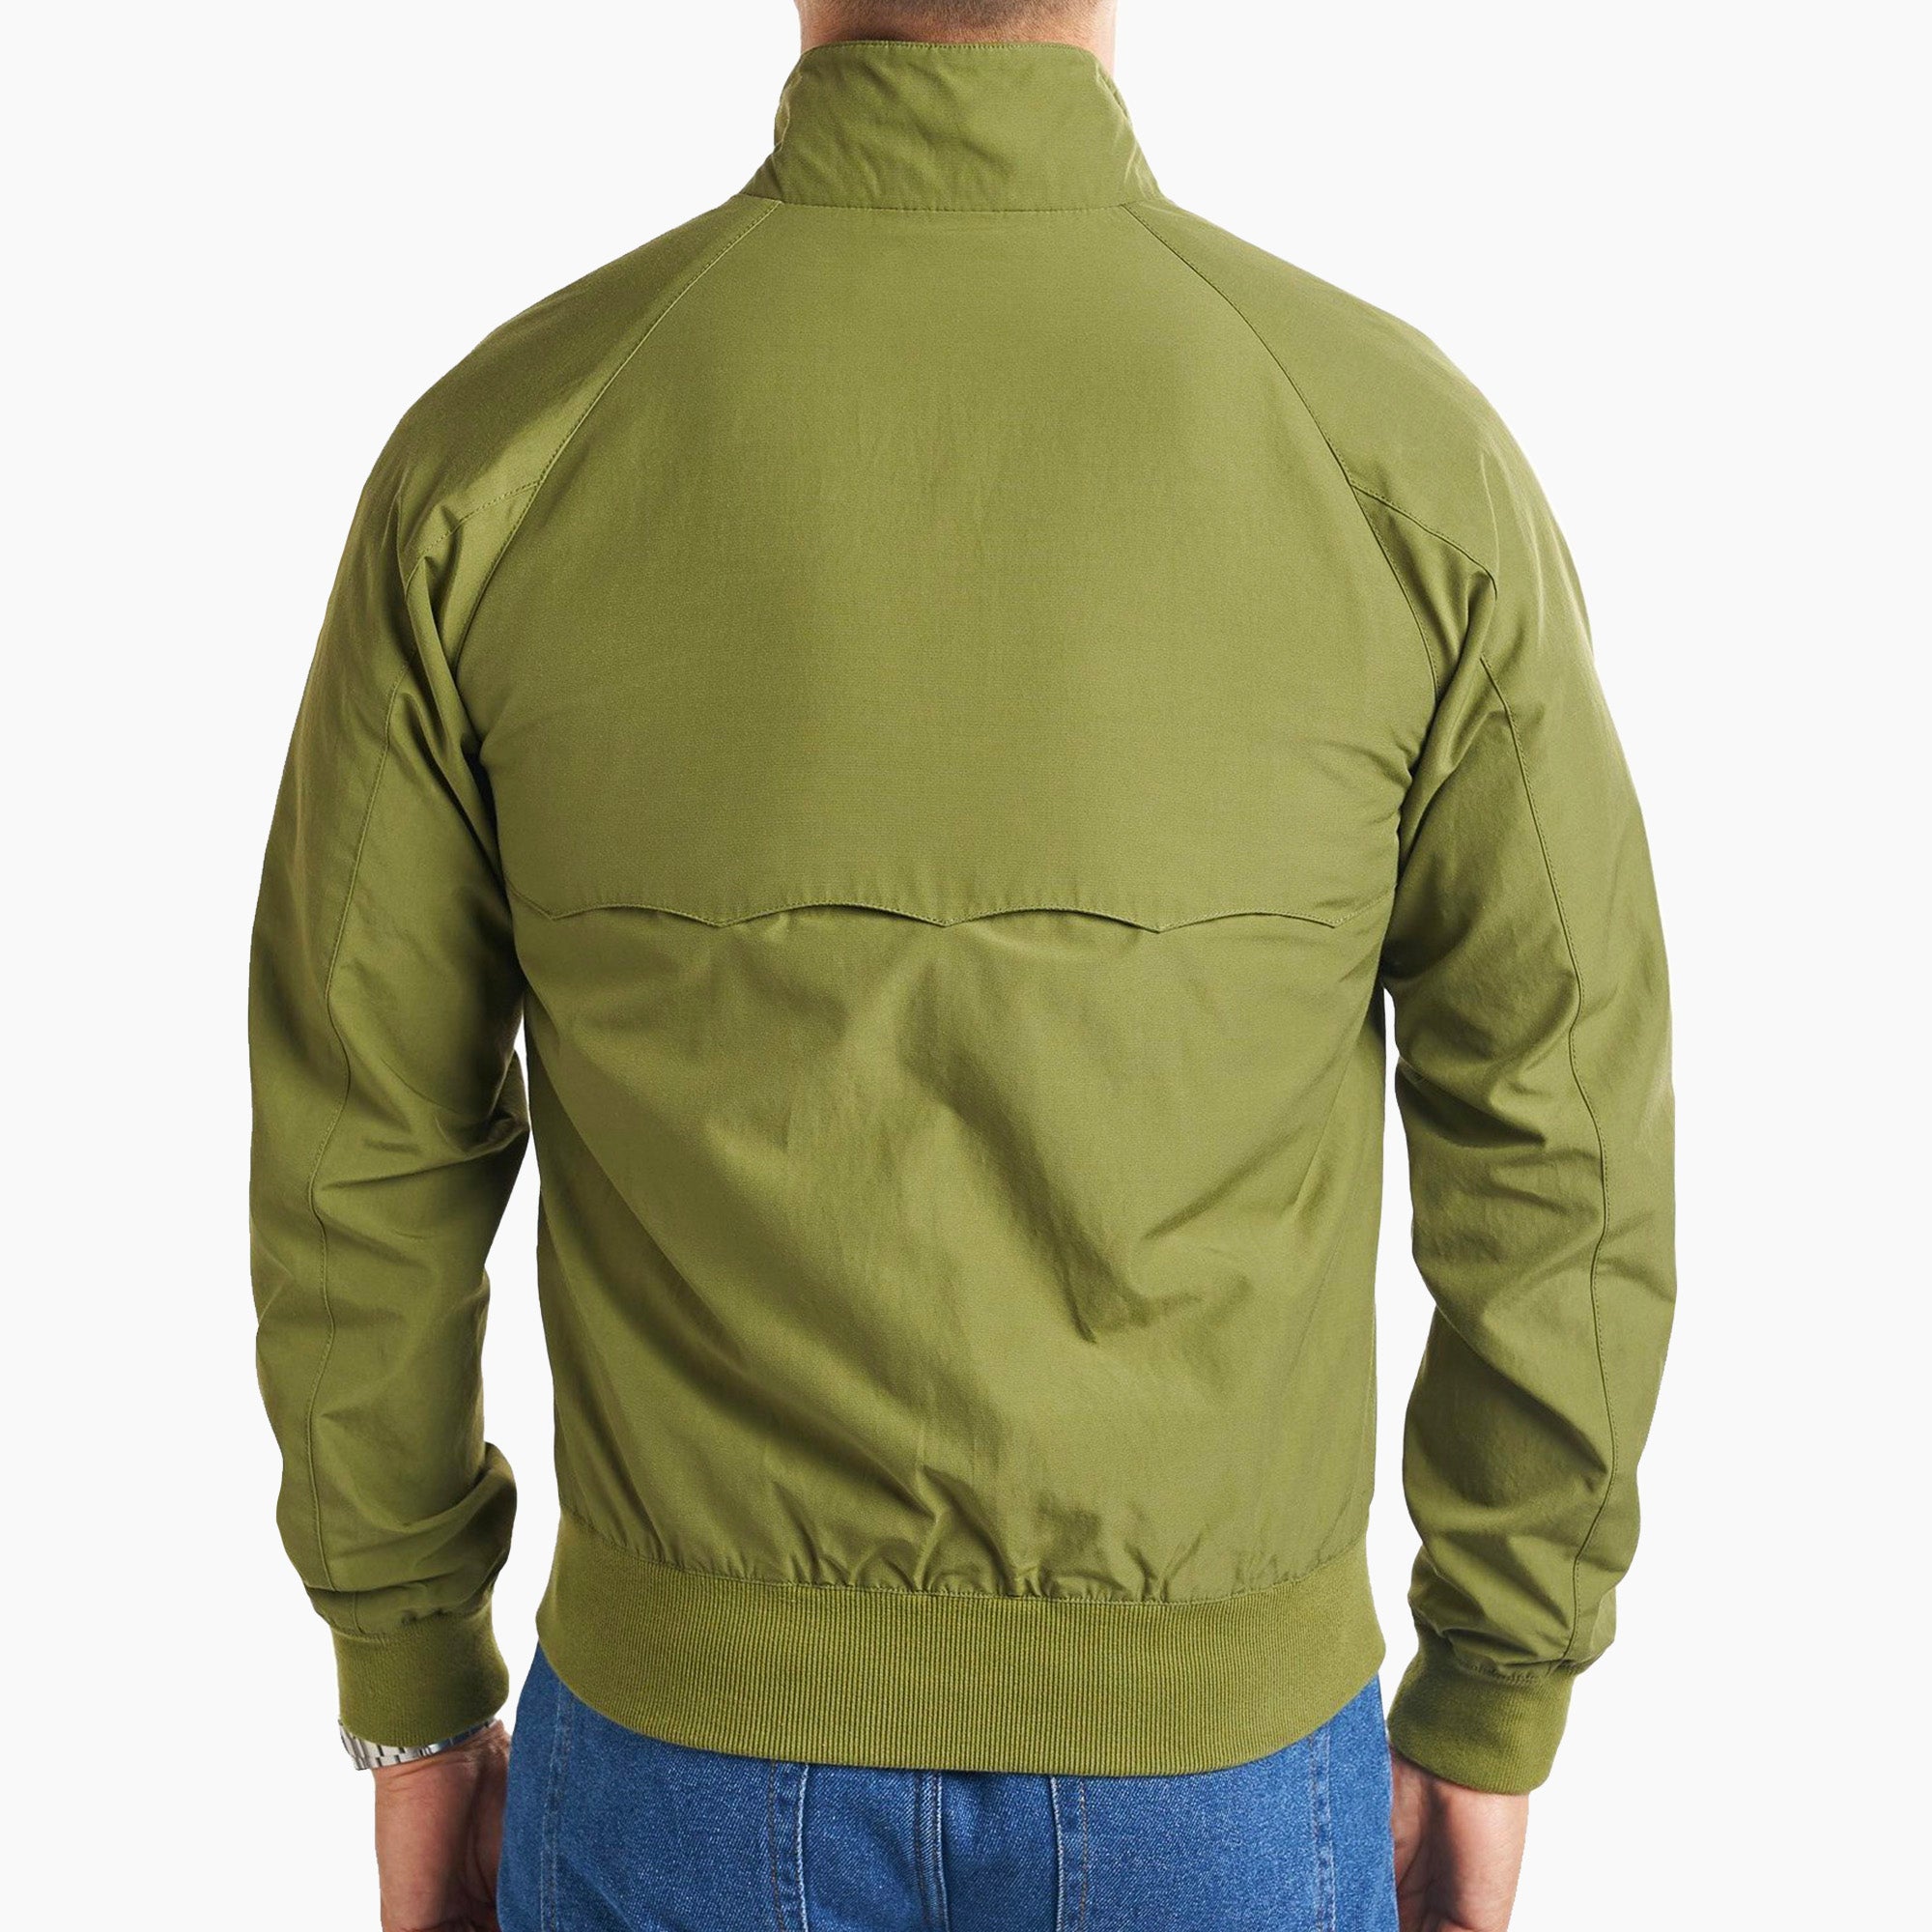 Olive Green All-Weather Harrington Jacket